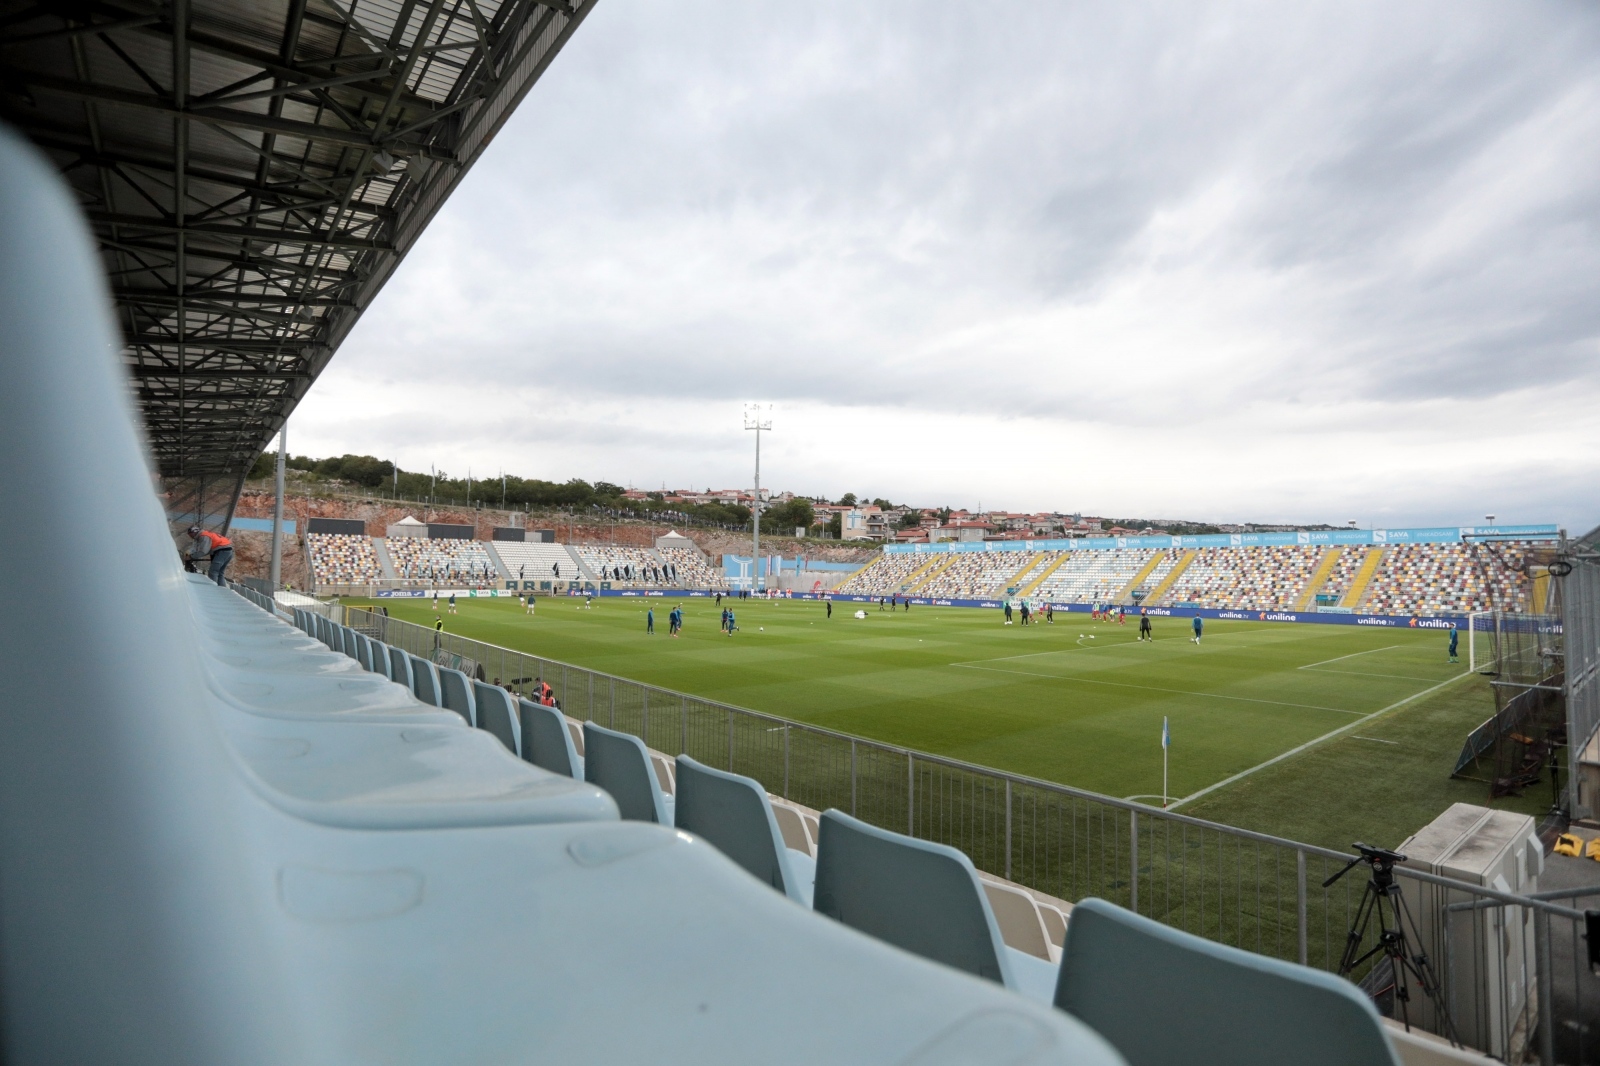 NK Osijek vs. HNK Rijeka 2020-2021